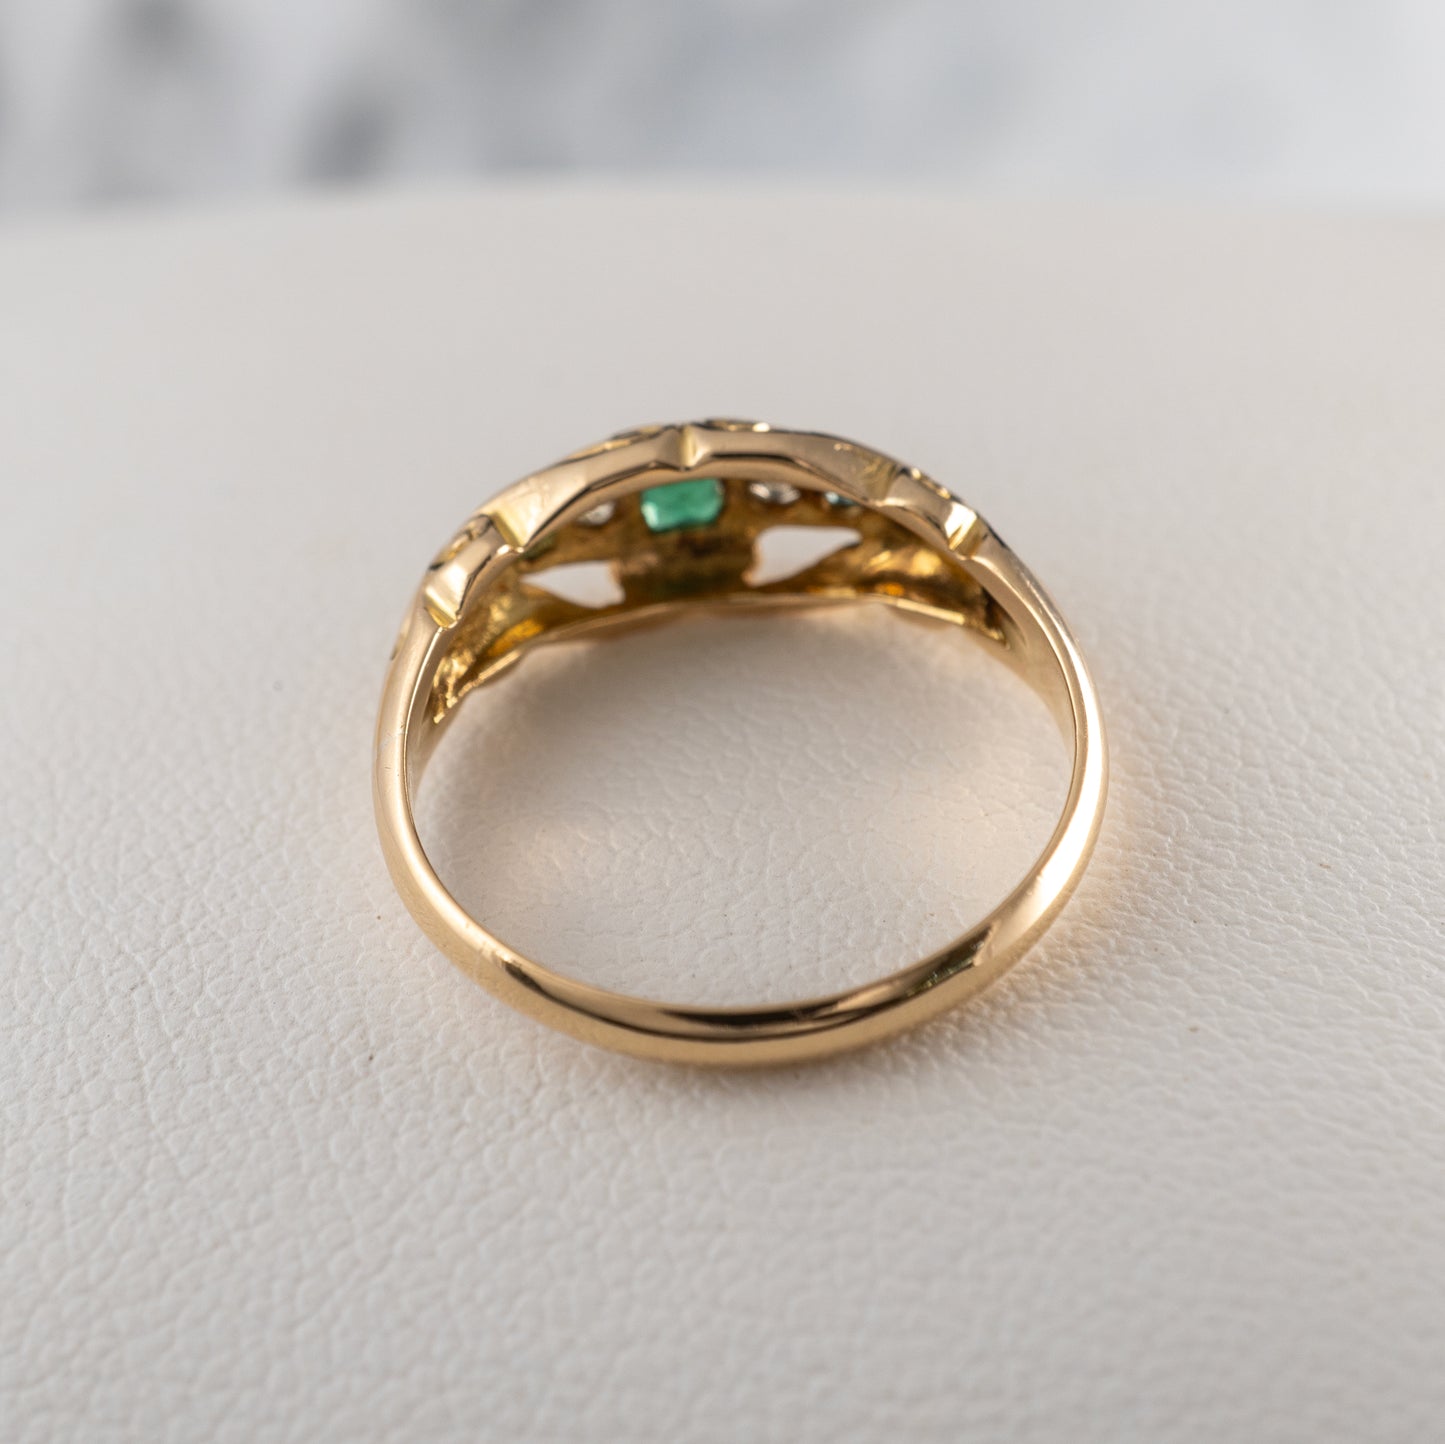 Antique Emerald Diamond Ring 18ct Gold